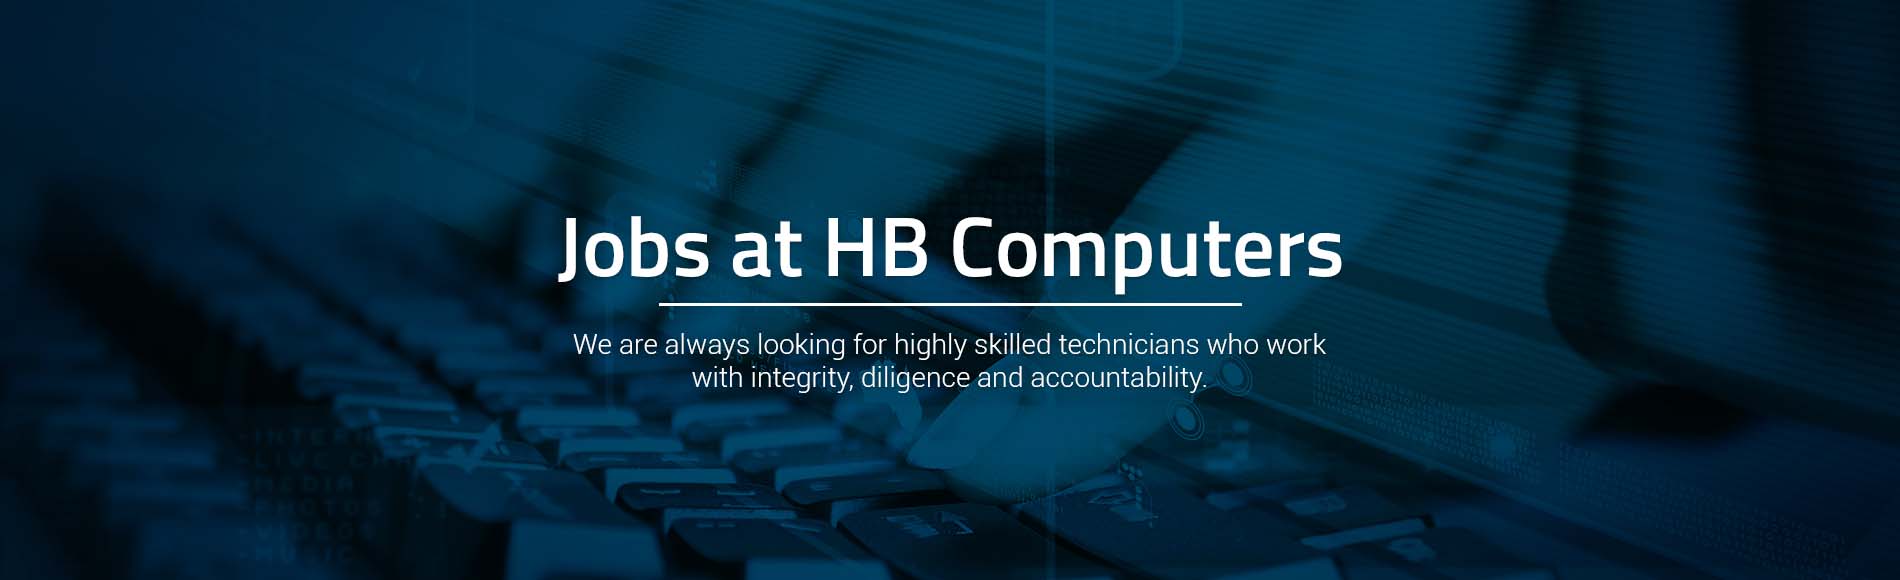 Jobs at HB Computers